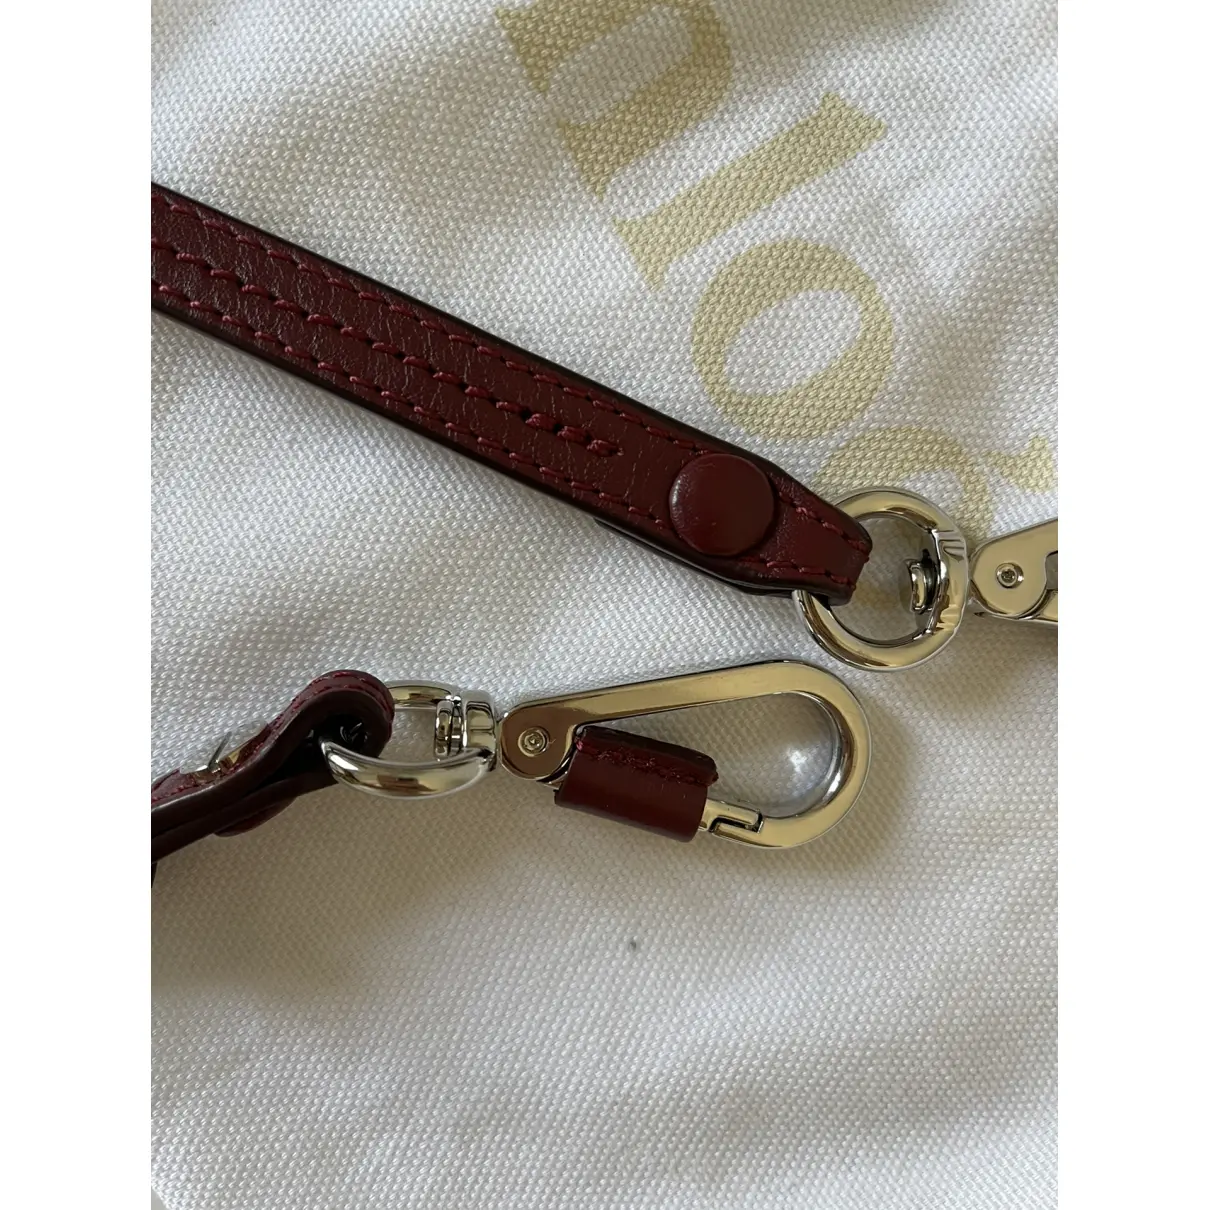 Buy Chloé Bracelet Nile leather handbag online